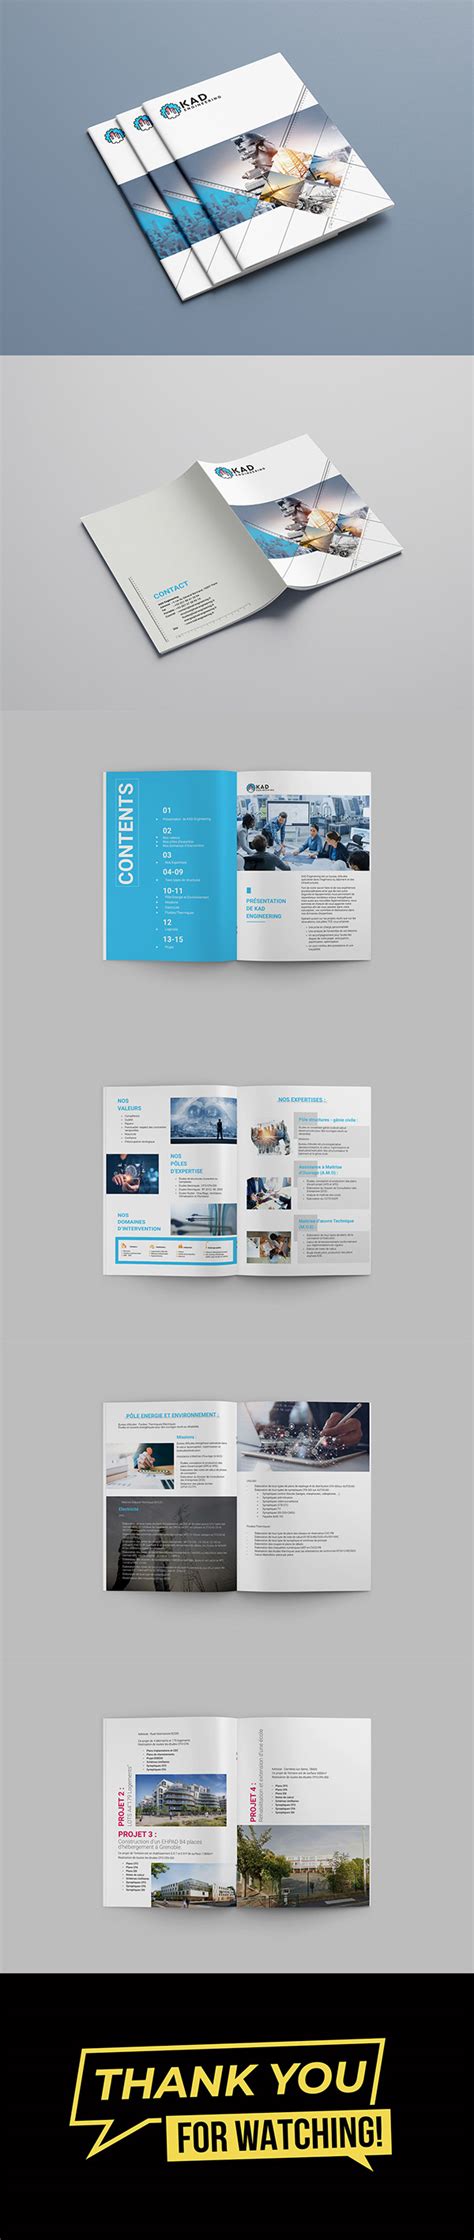 Construction Company Profile Template Brochure Design On Behance